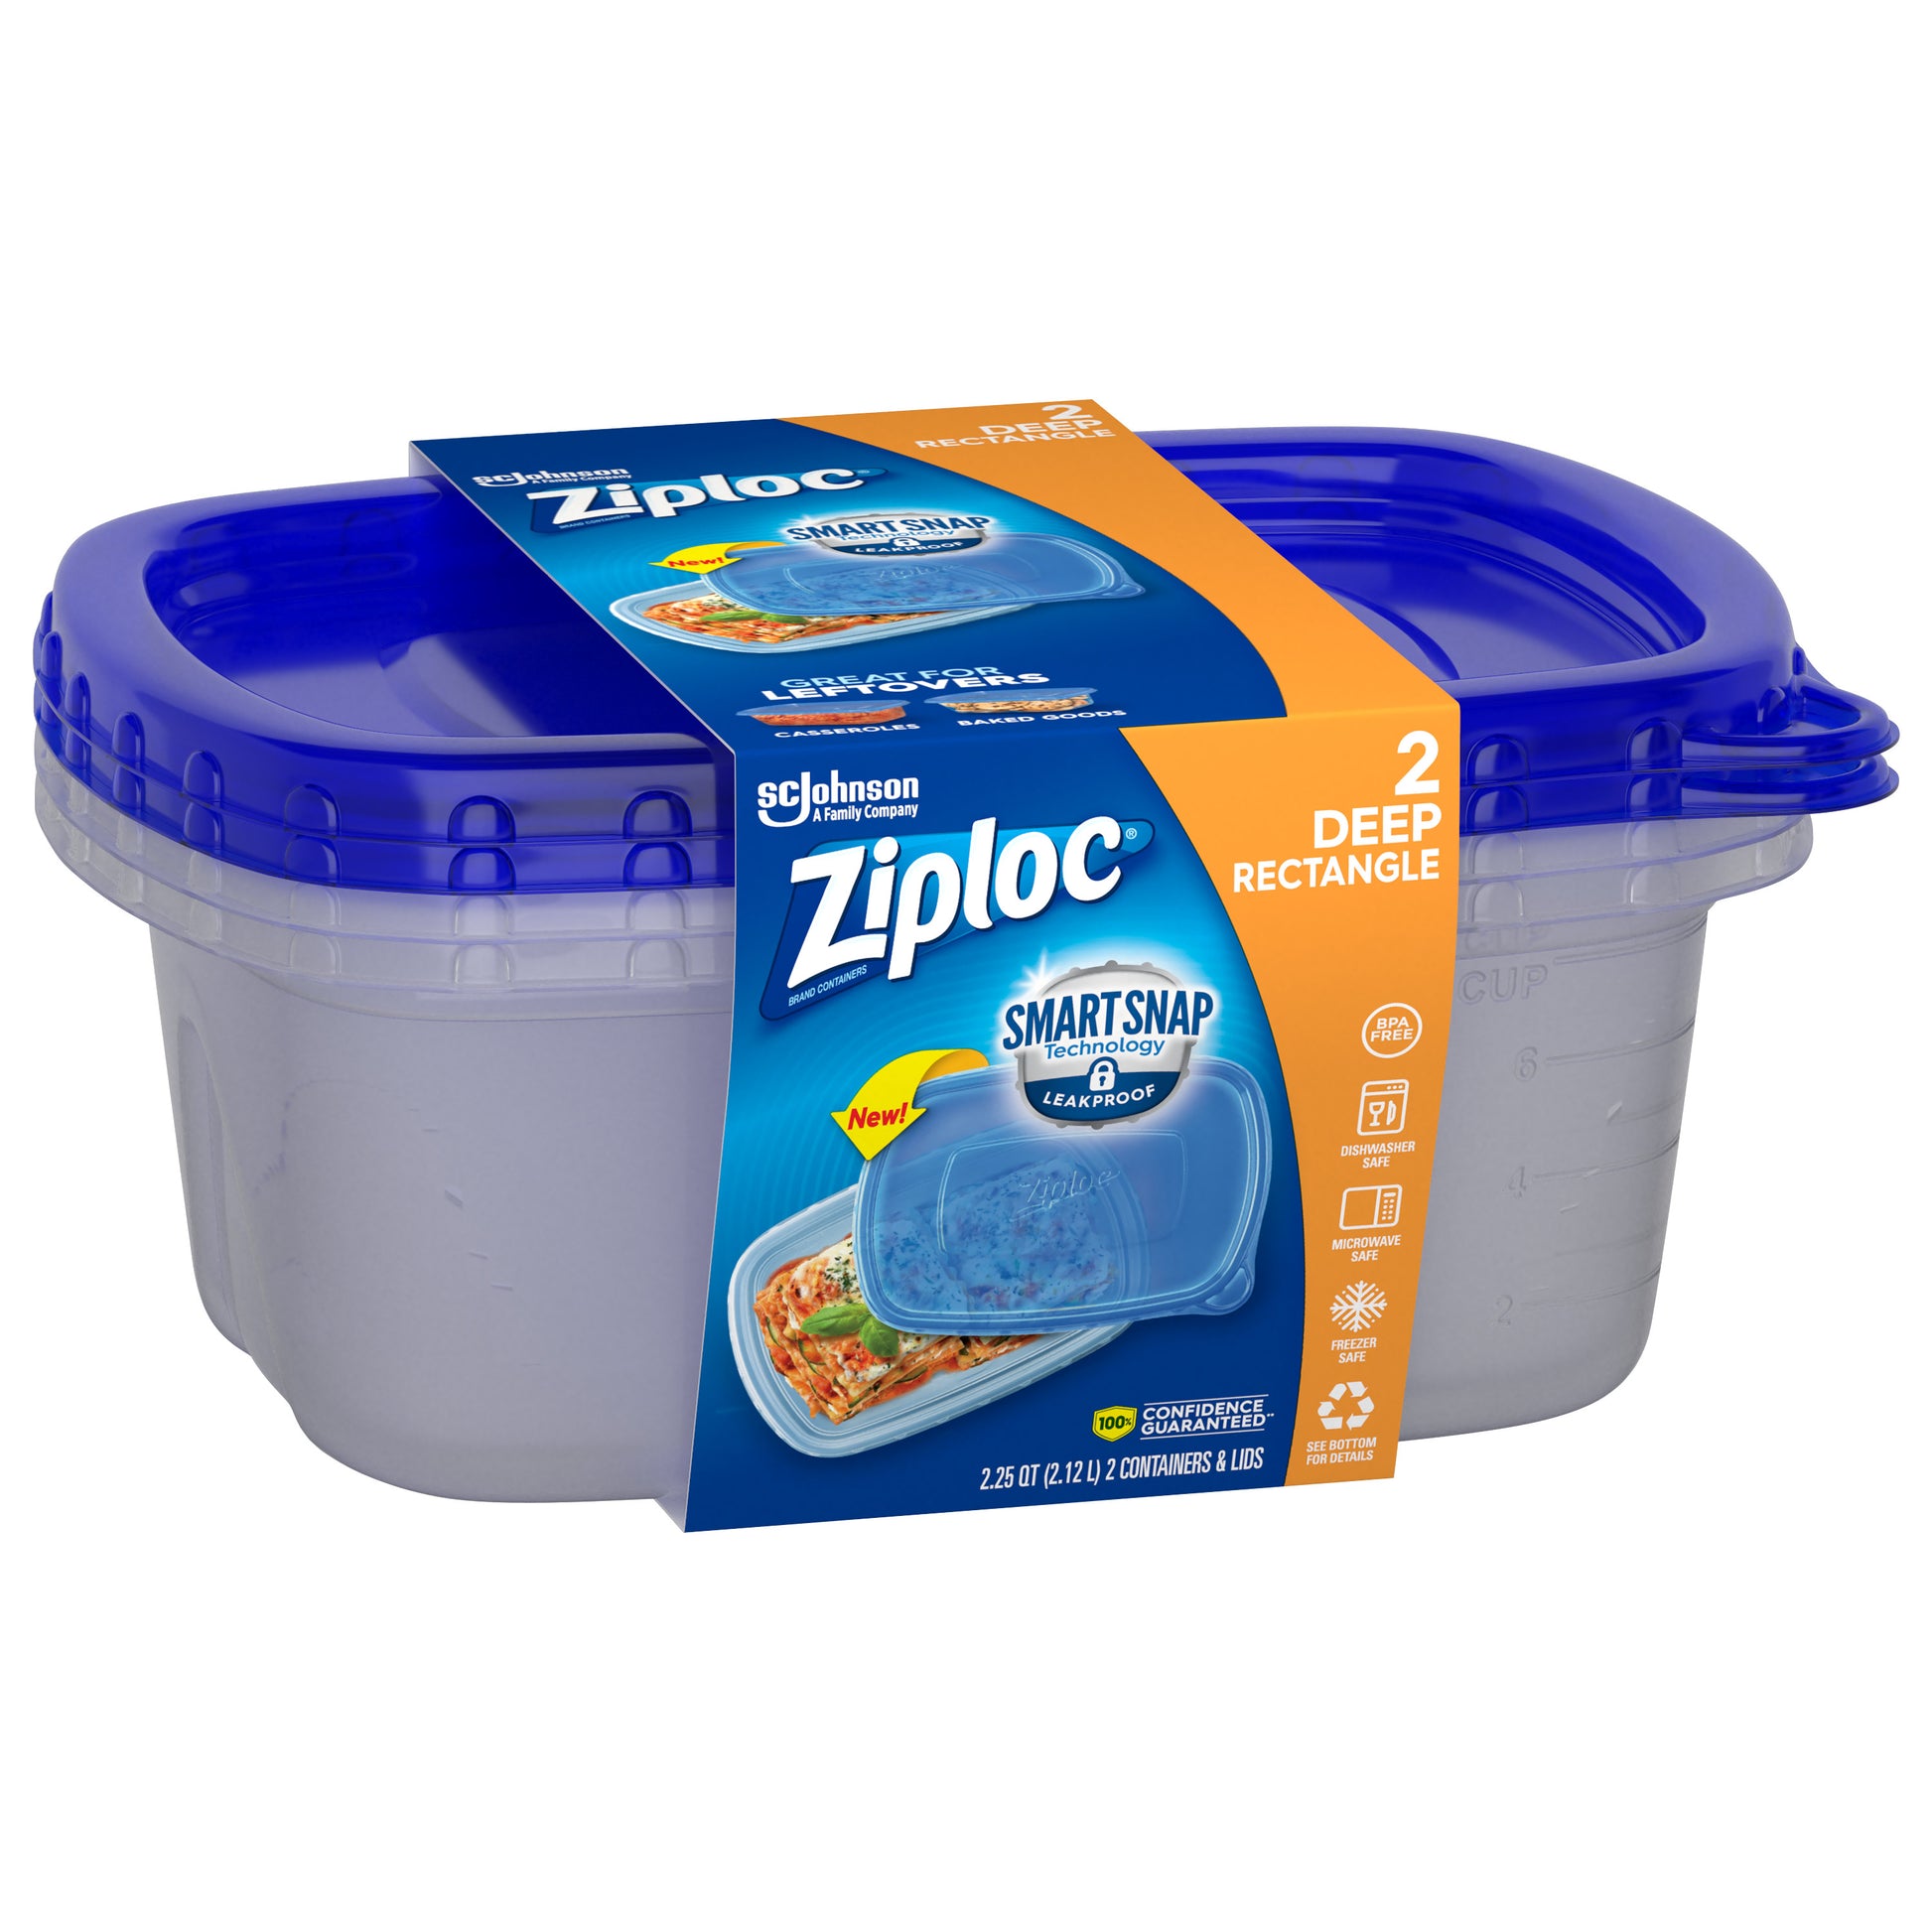 Ziploc Brand, Food Storage Containers with Lids, Twist n Loc, Medium Round,  2 ct